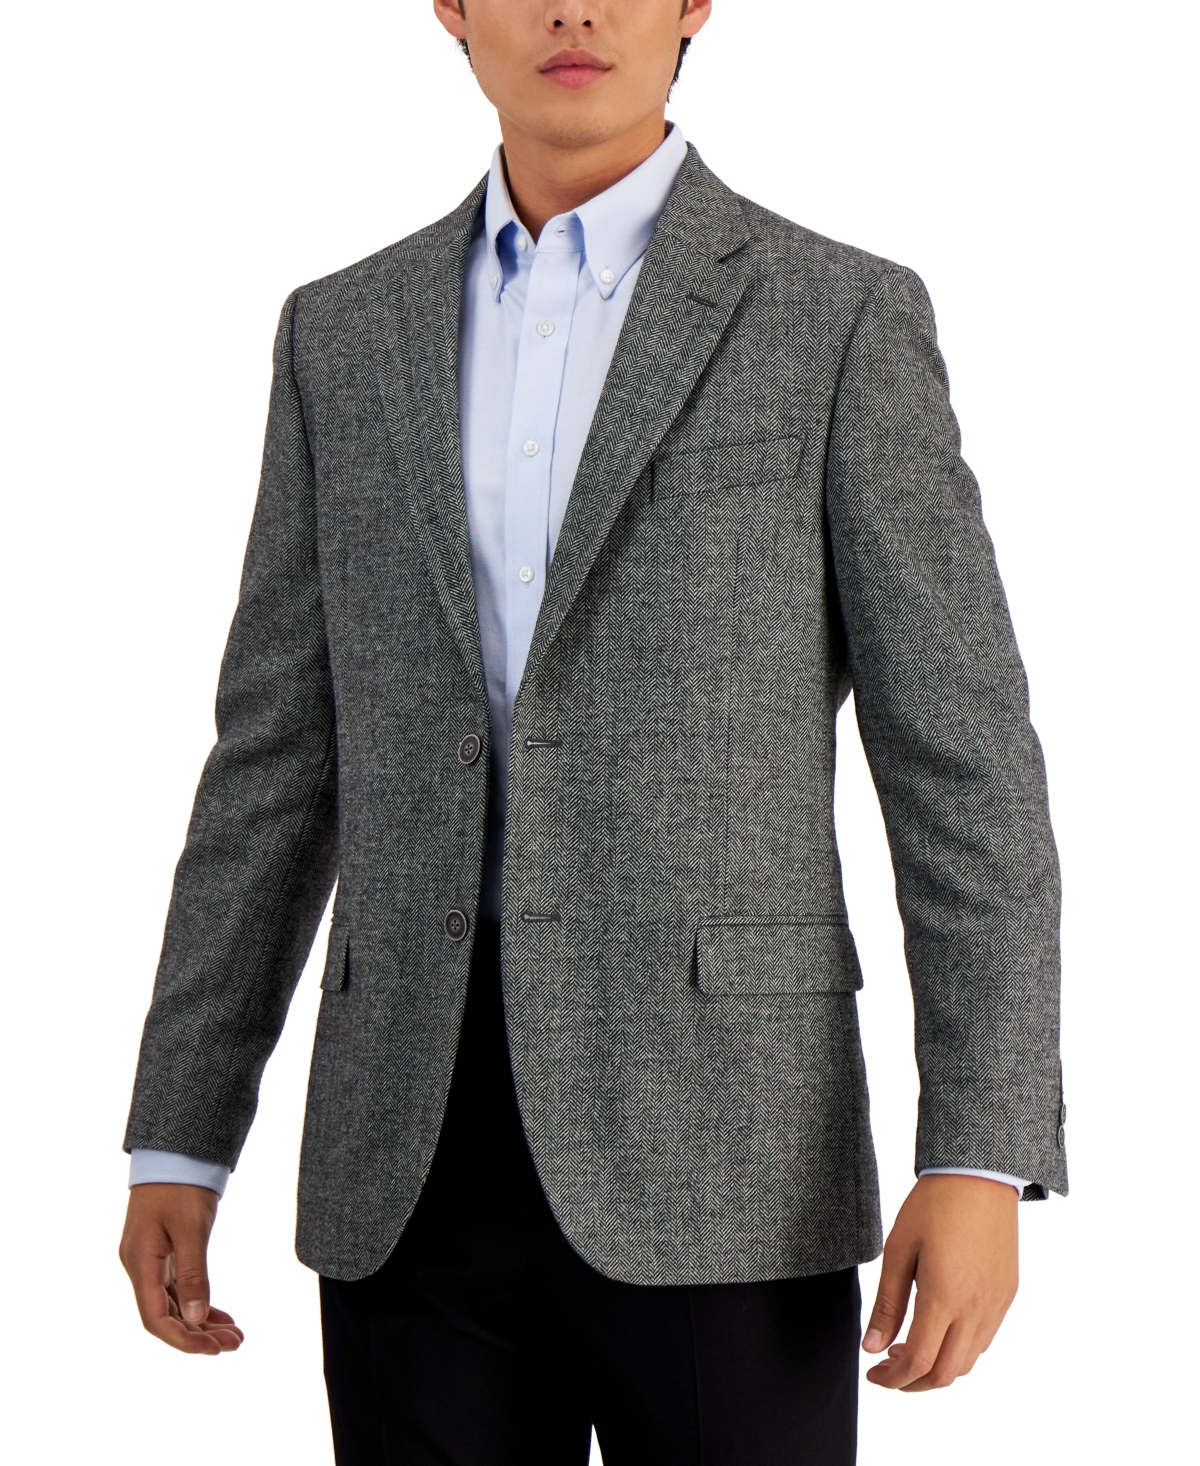 Nautica Men's Modern-Fit Solid Herringbone Tweed Sport Coat (44R, Grey)